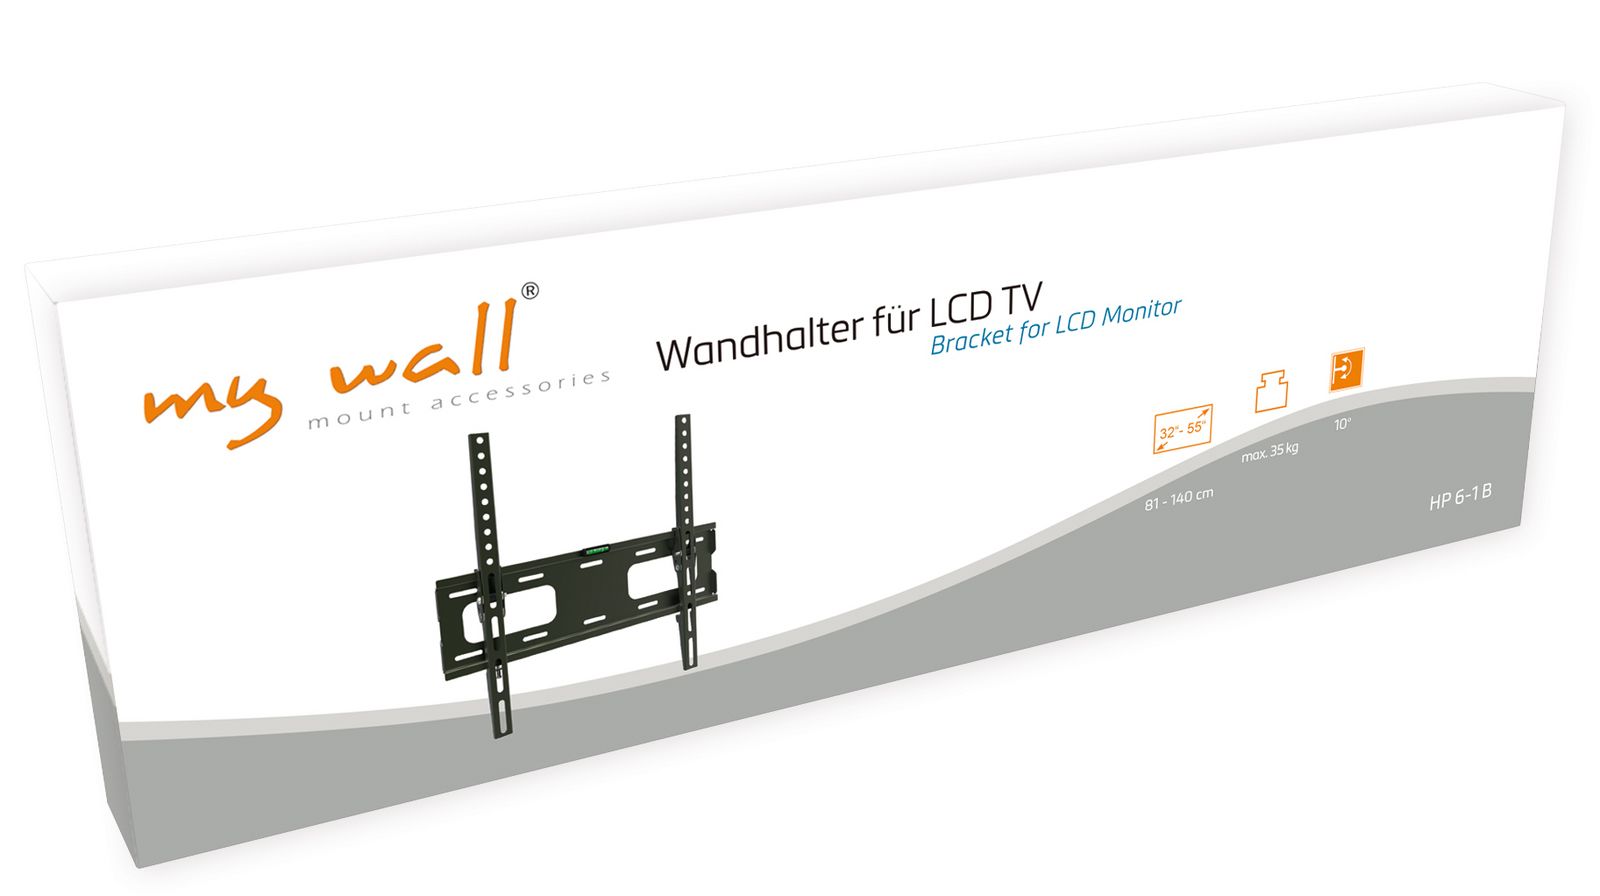 Wandhalter für LCD TV my wall HP6-1B-/bilder/big/hp6-1b_karton.jpg